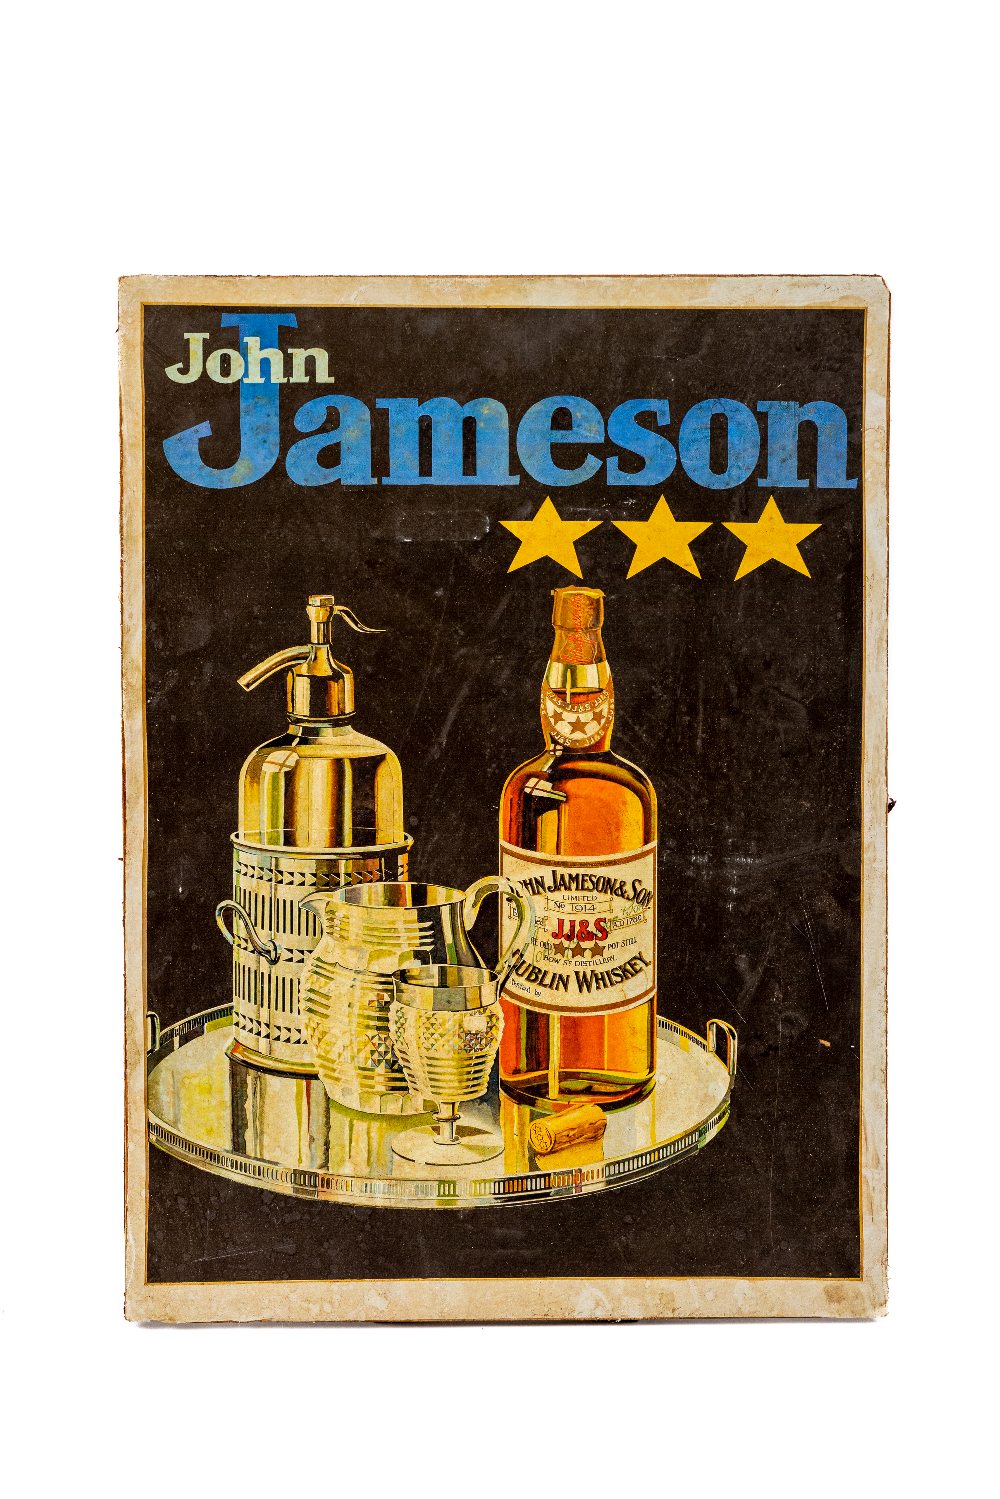 Advertisement:  John Jameson, (Three Star) Dublin Whiskey, printed adverts on stand, some wear.